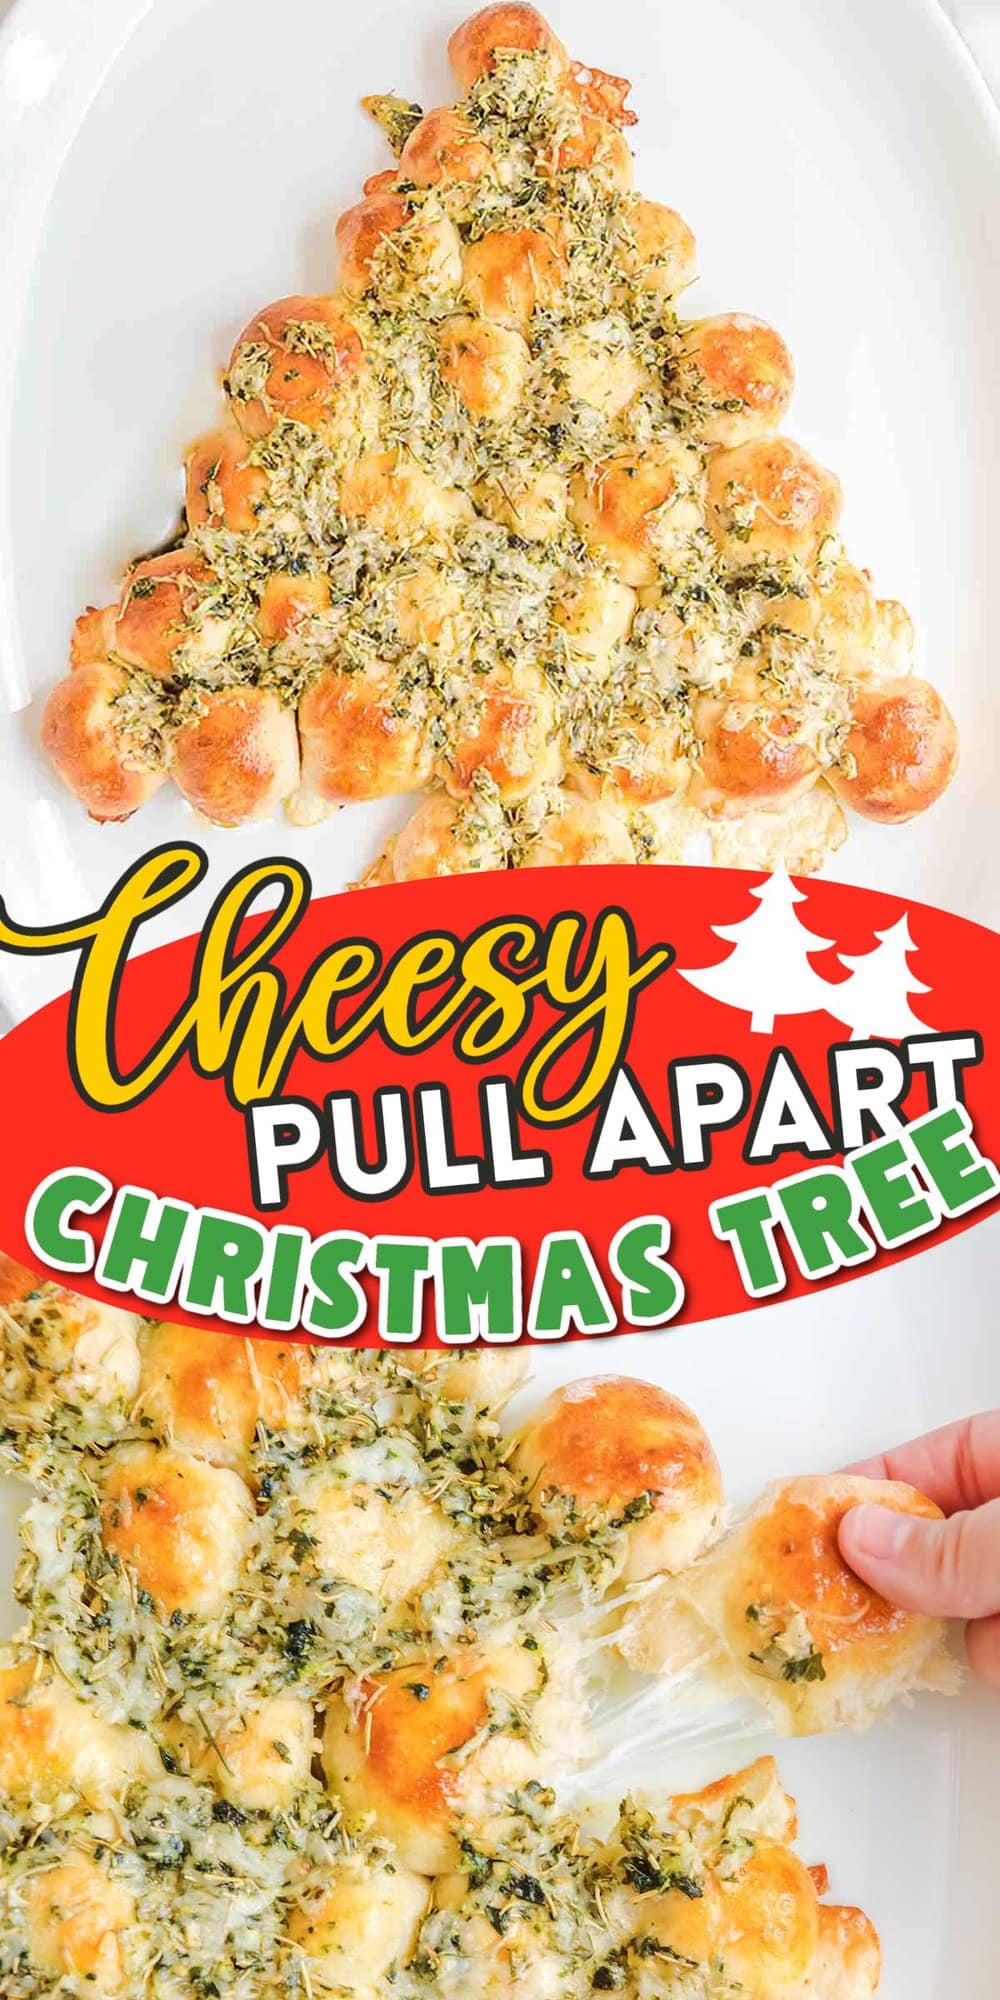 Pull Apart Christmas Tree Bread pinterest